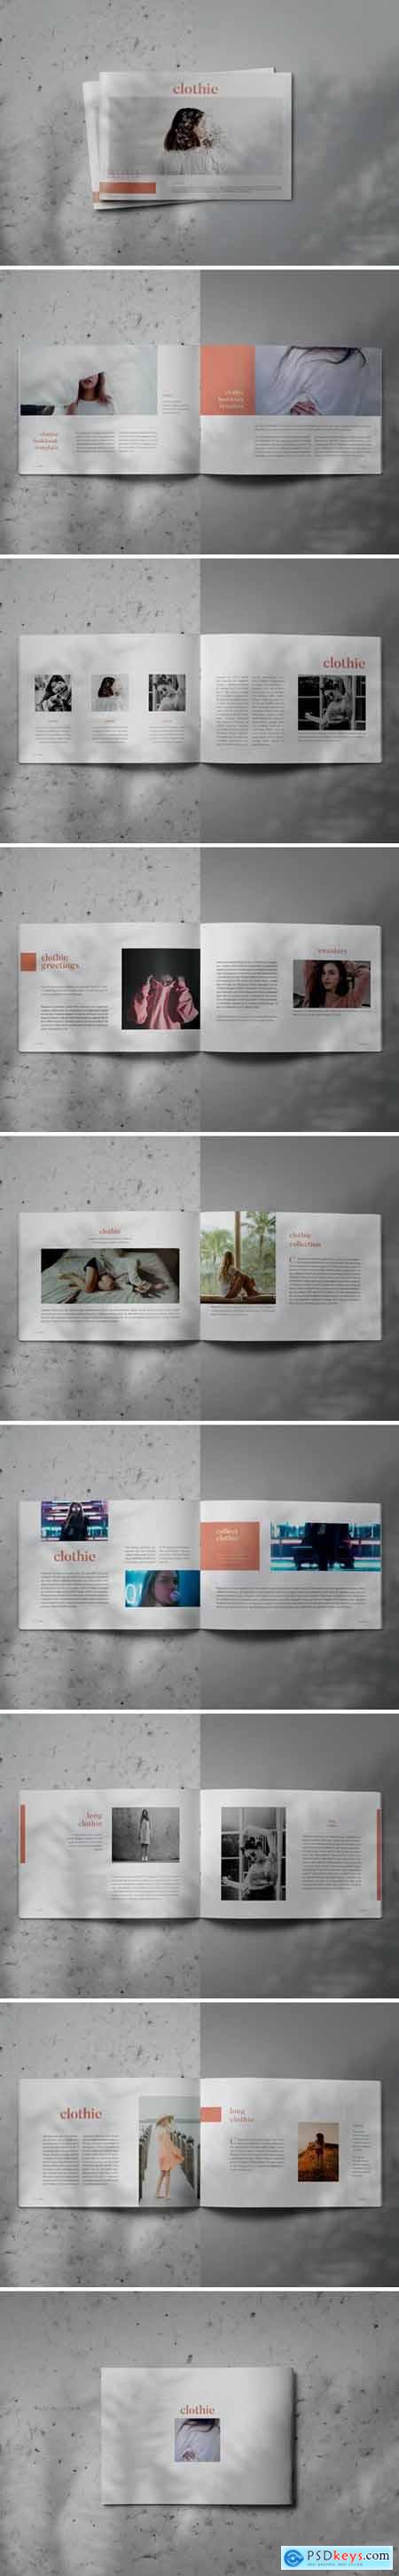 CLOTHIE - Indesign Lookbook Brochure Template